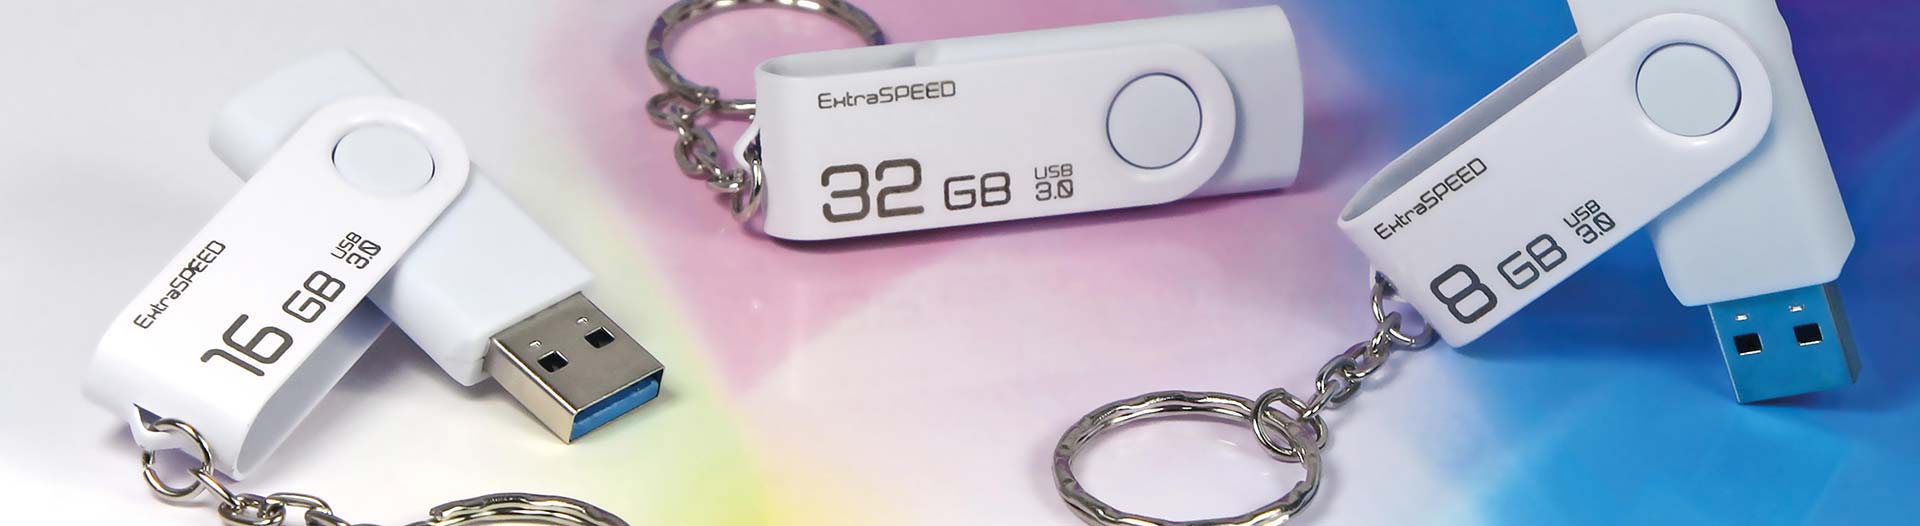 USB-Stick Extra Speed 32GB highspeed 3.0 logo